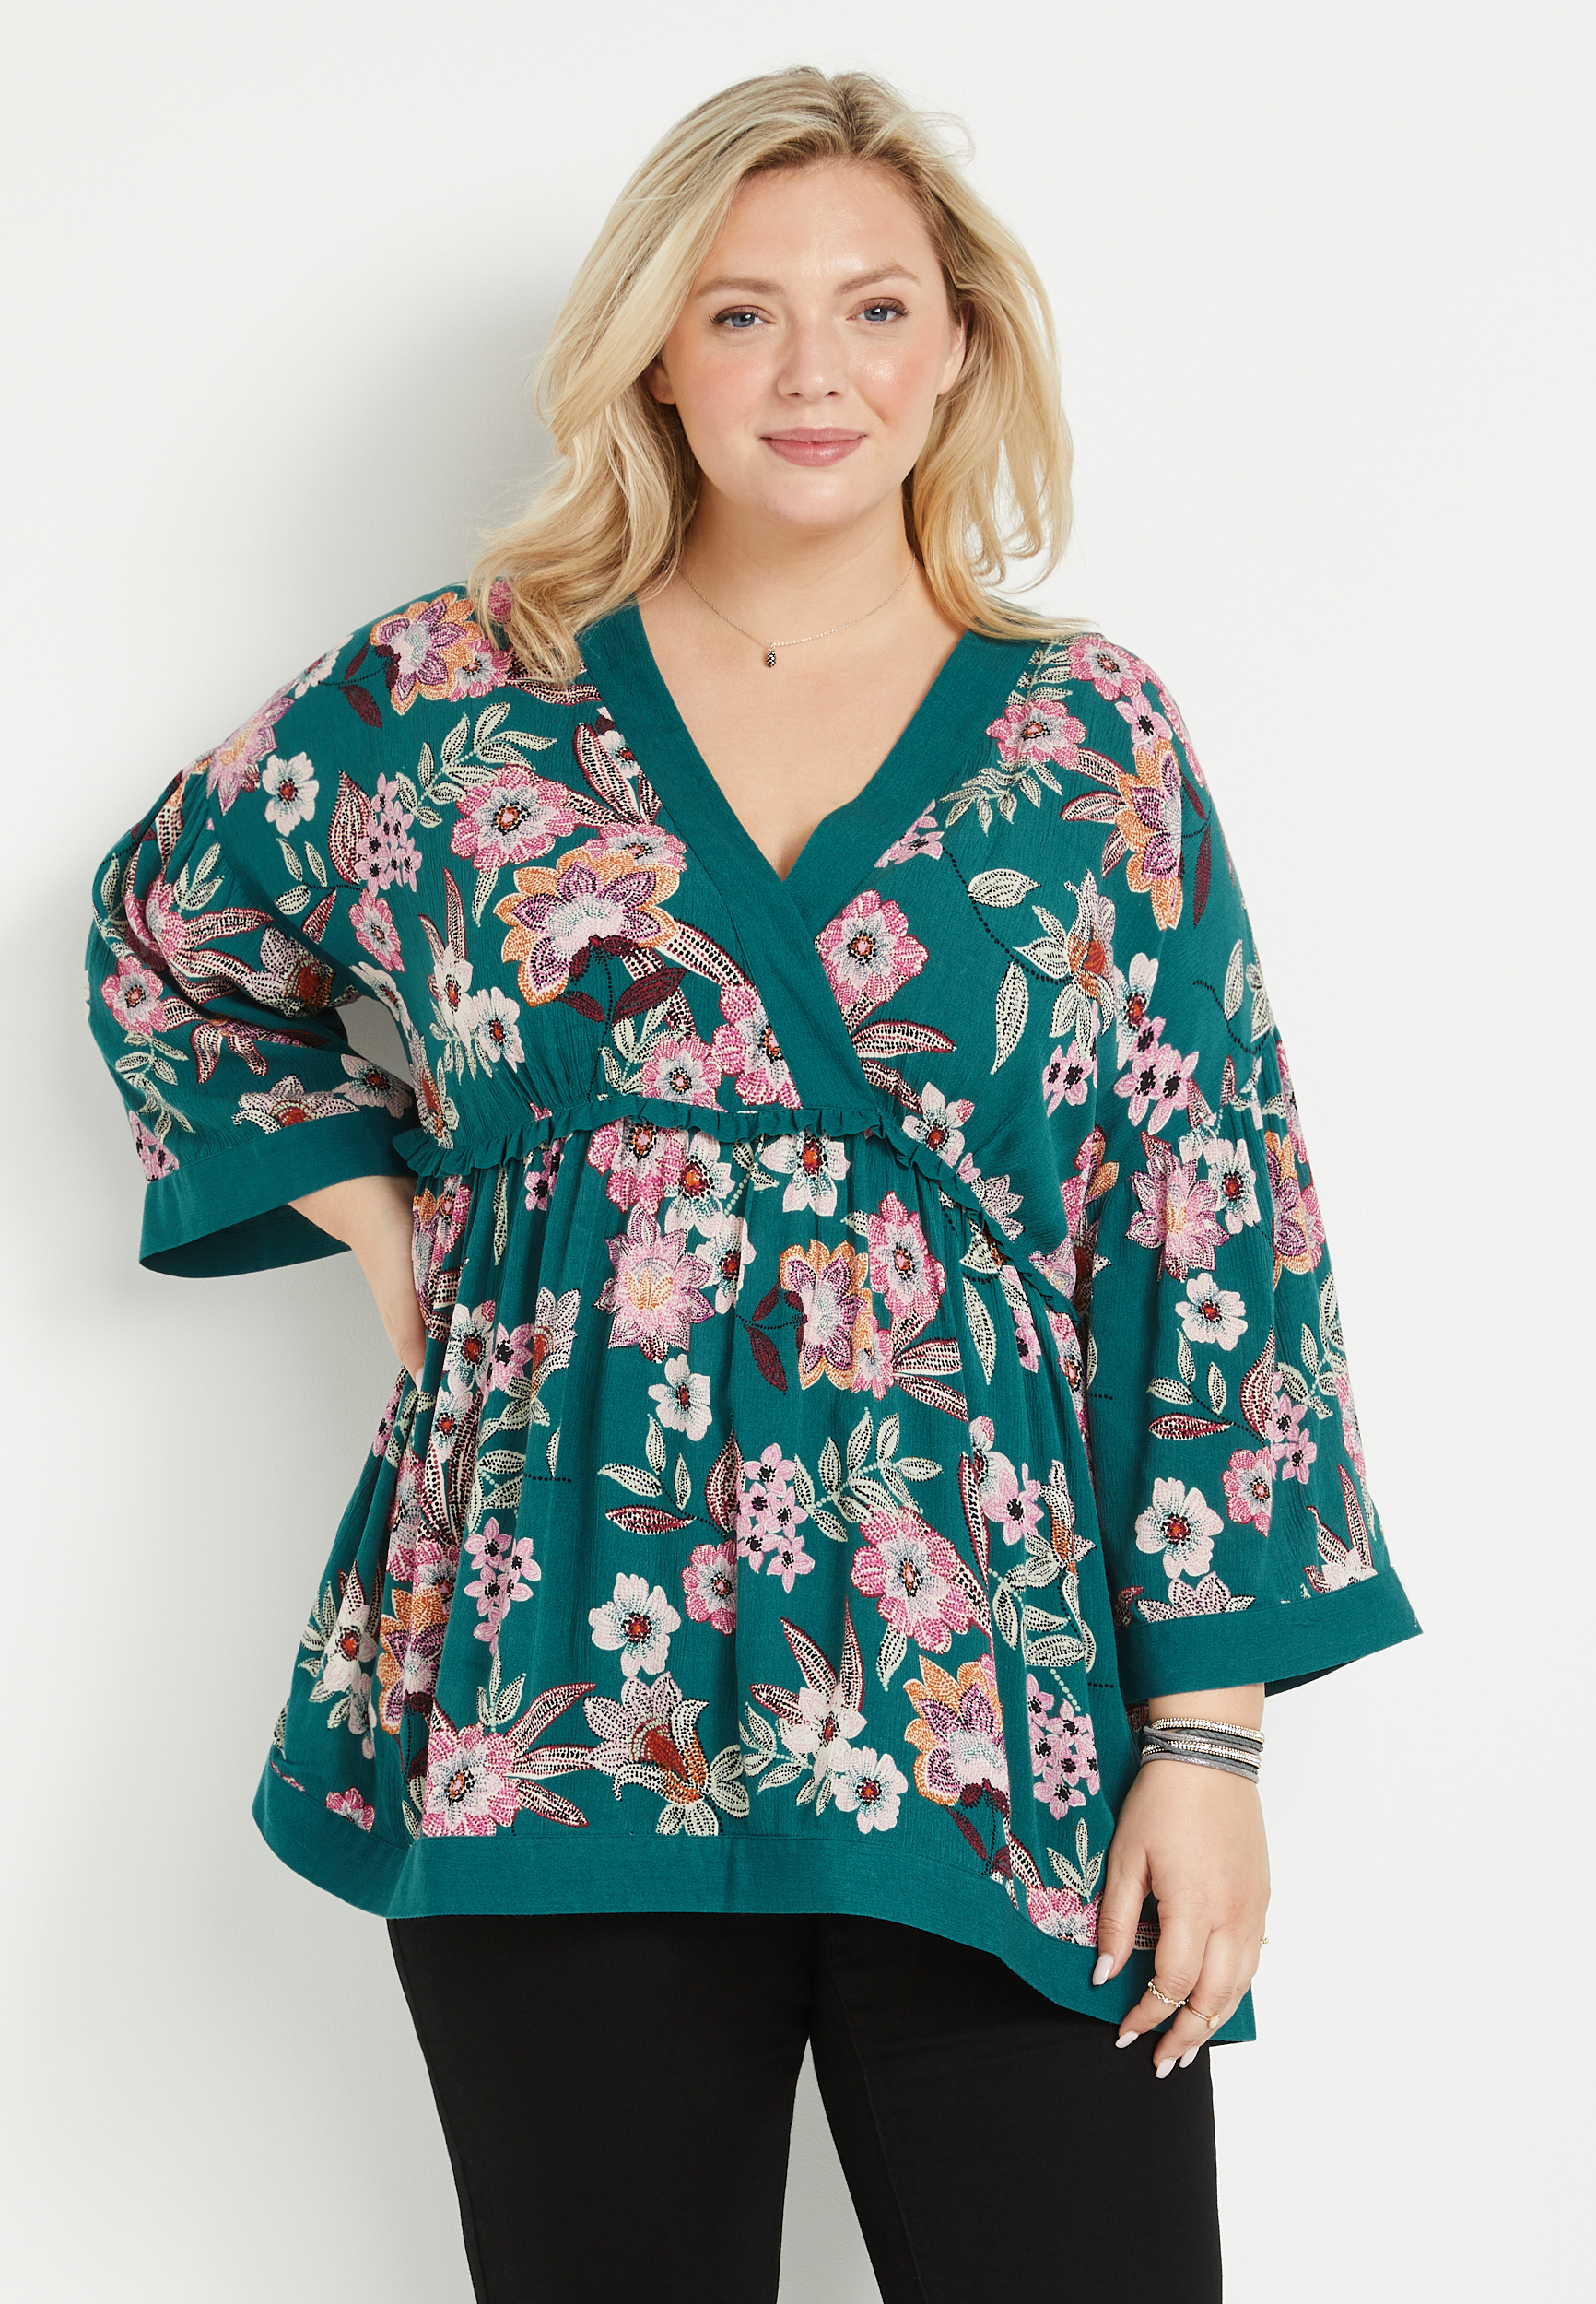 GOSOPIN Women Floral Print V Neck 3/4 Bell Sleeves Blouses Shirt Tunic Tops